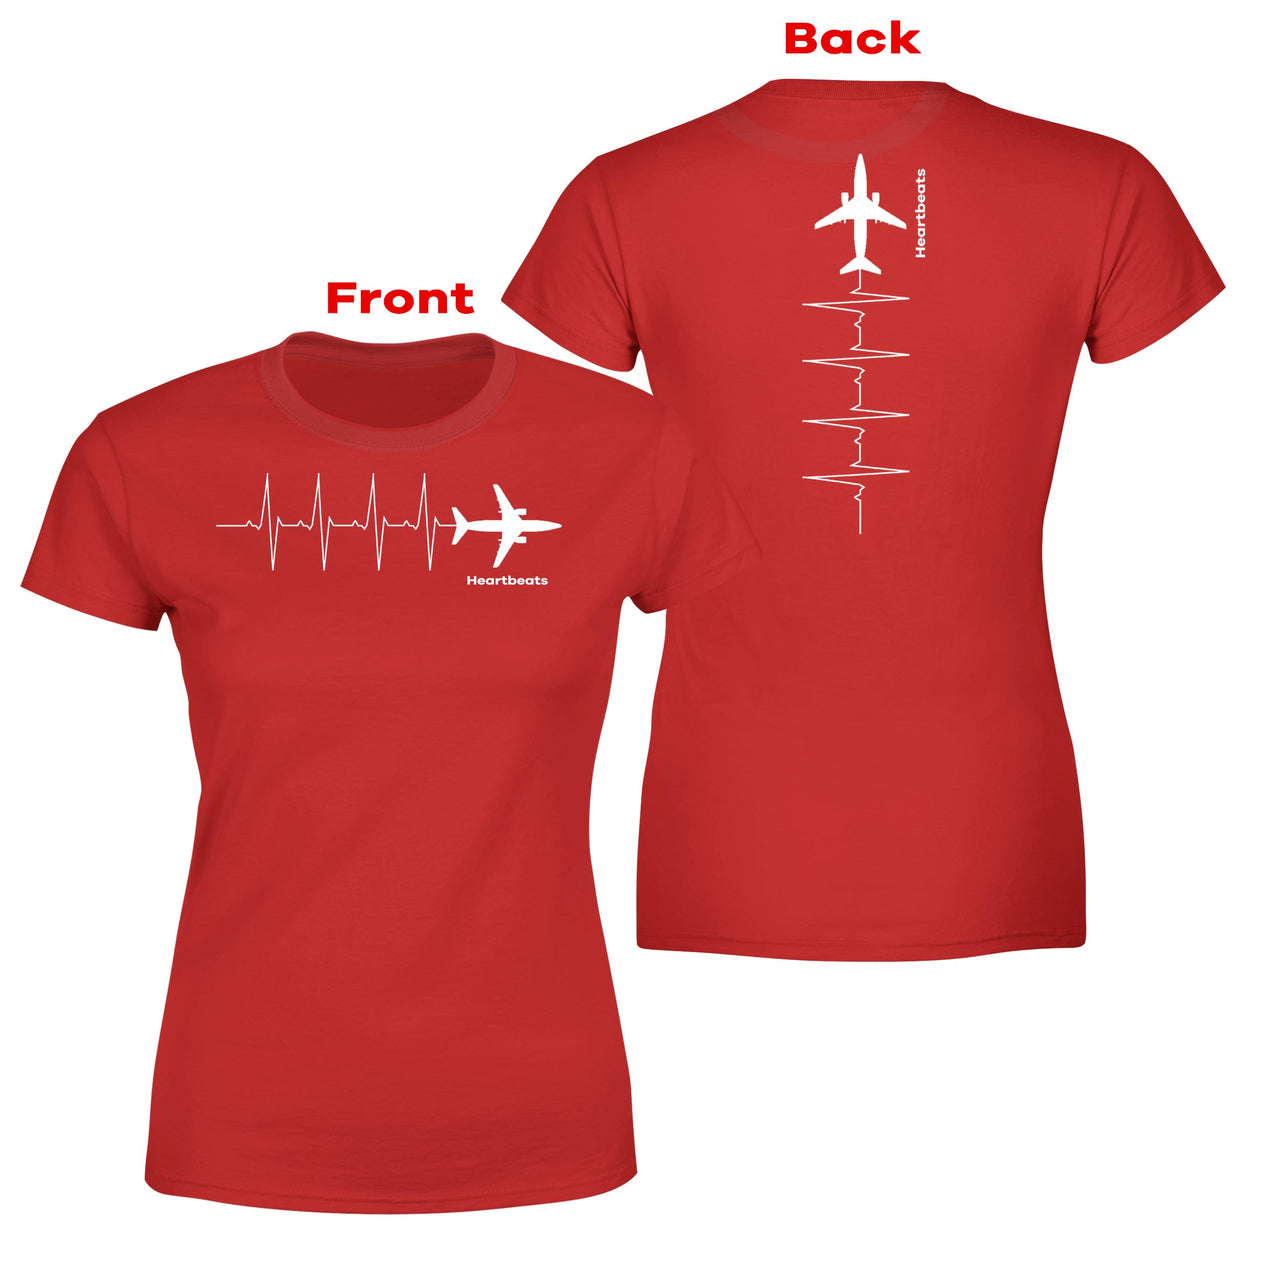 Aviation Heartbeats Designed Double-Side T-Shirts